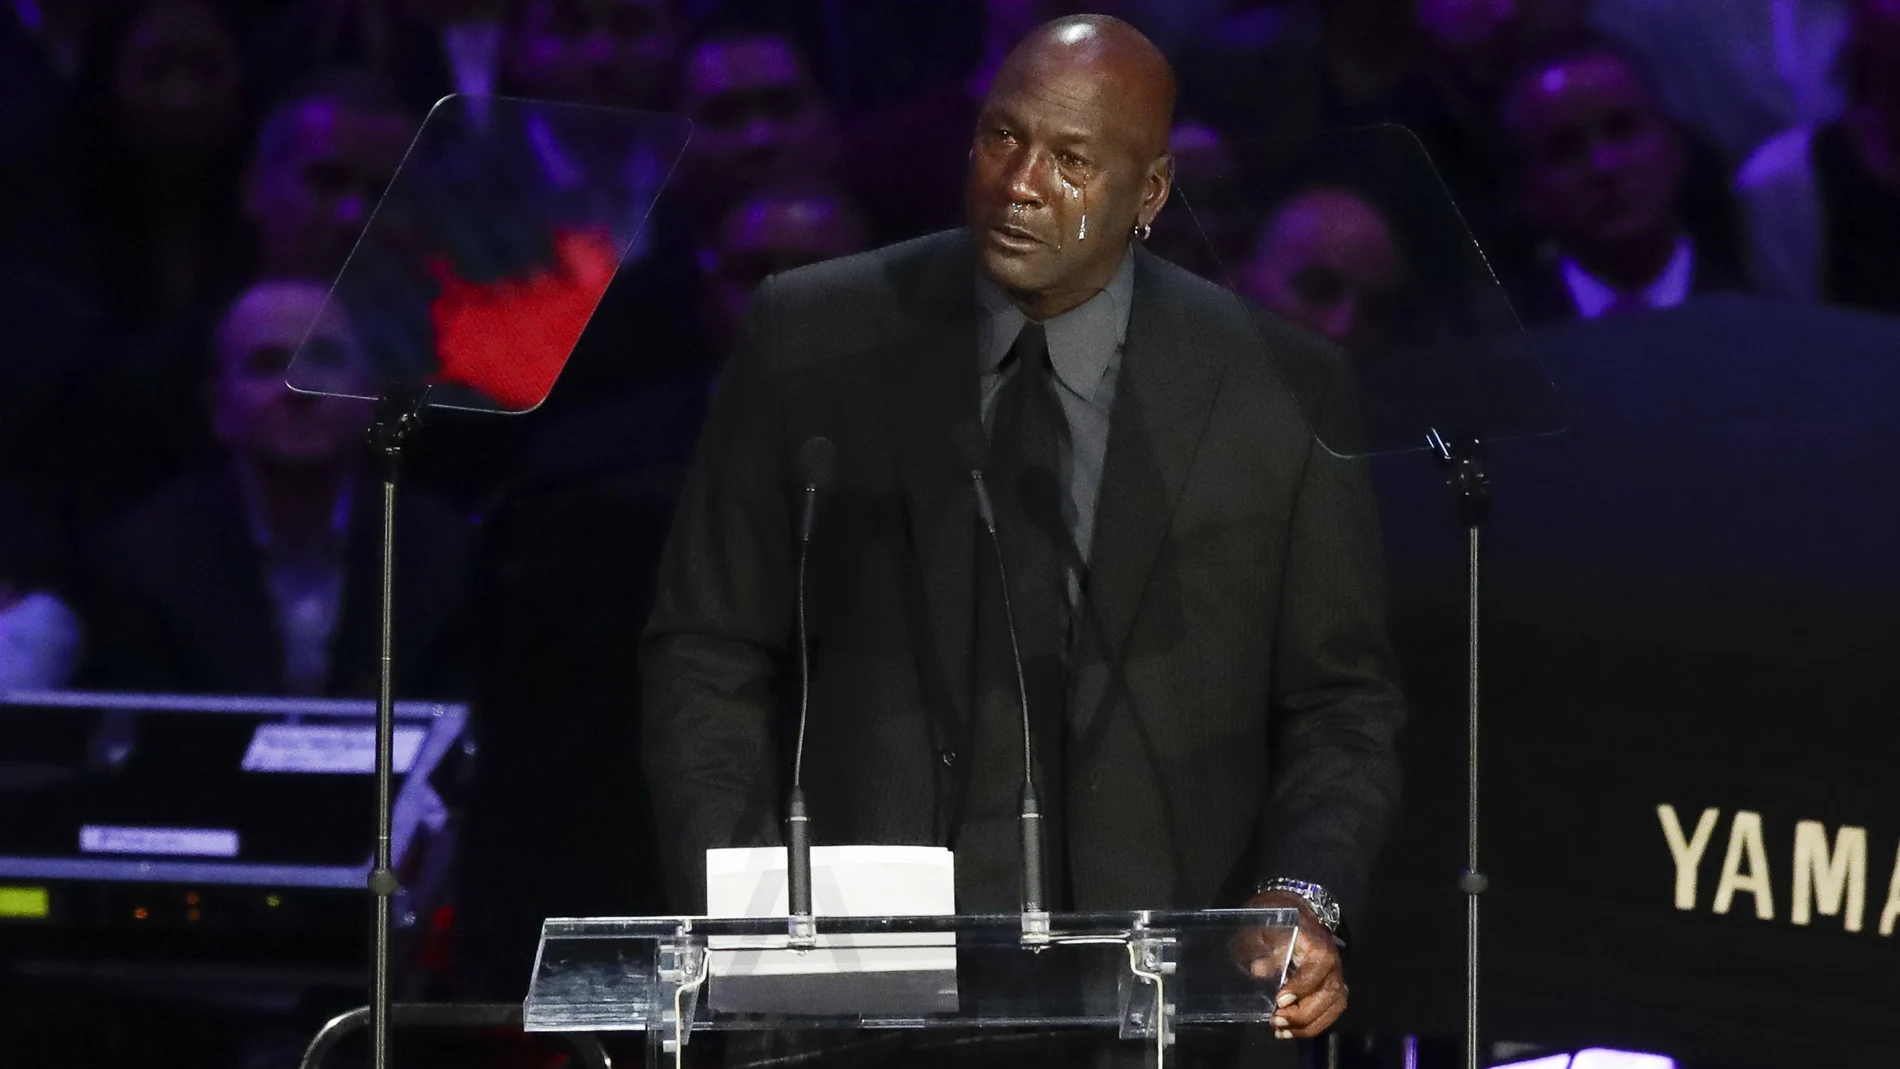 Michael Jordan lloró en el homenaje a Kobe bryant